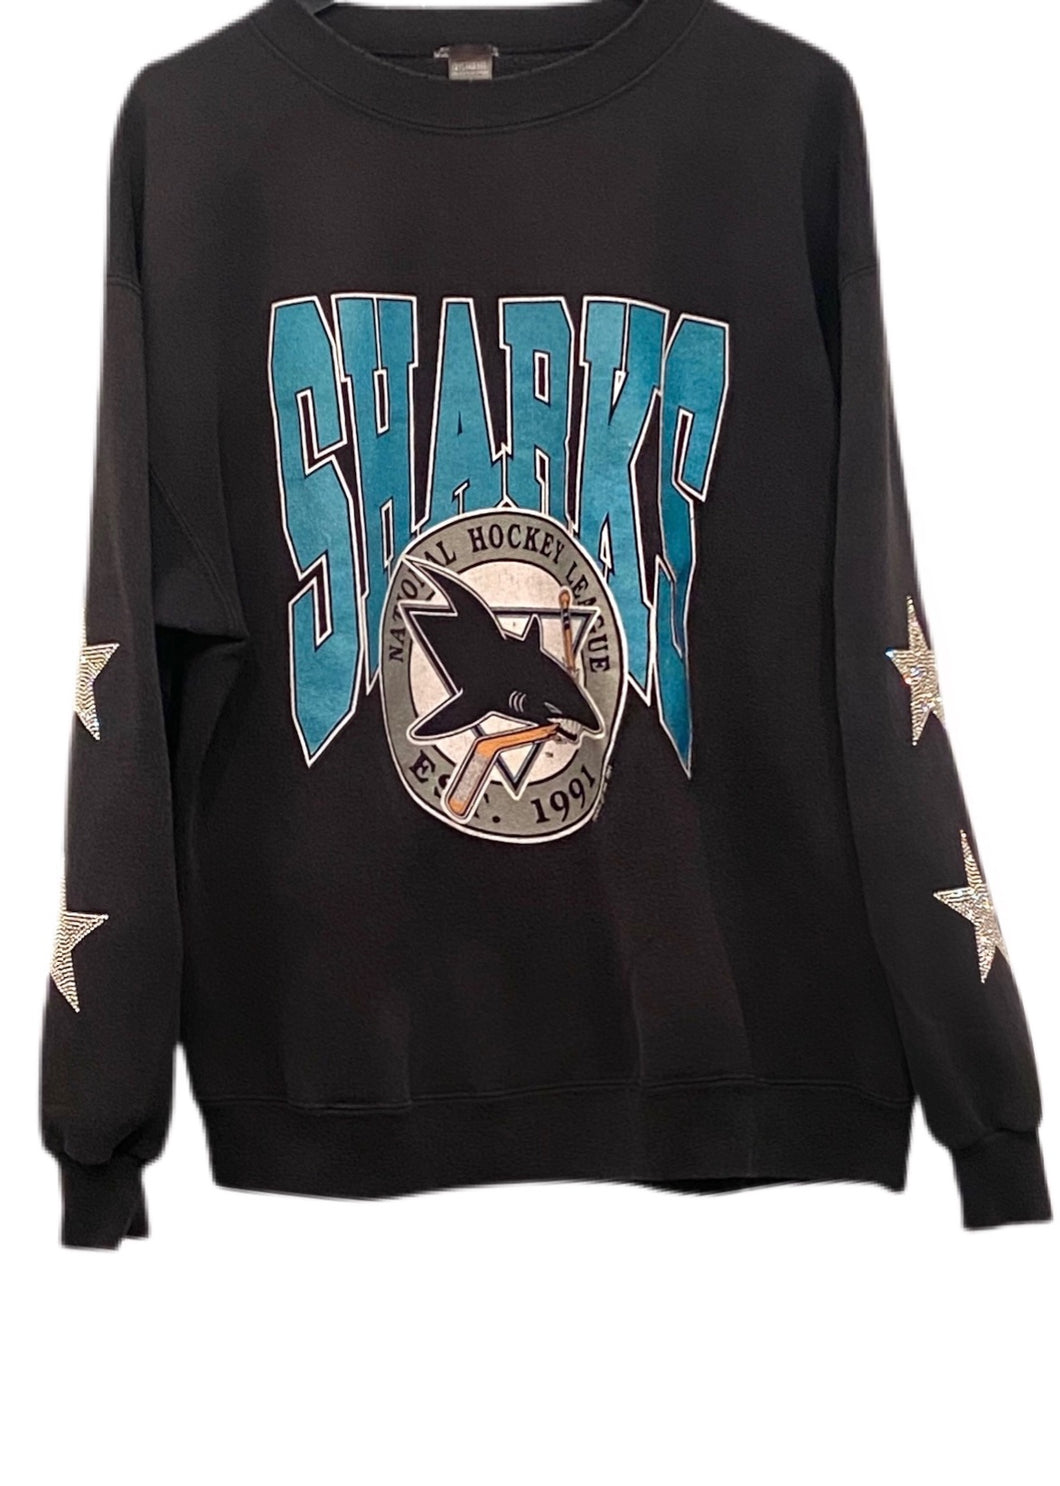 San Diego Sharks, NHL One of a KIND Vintage Sweatshirt with Crystal Star Design